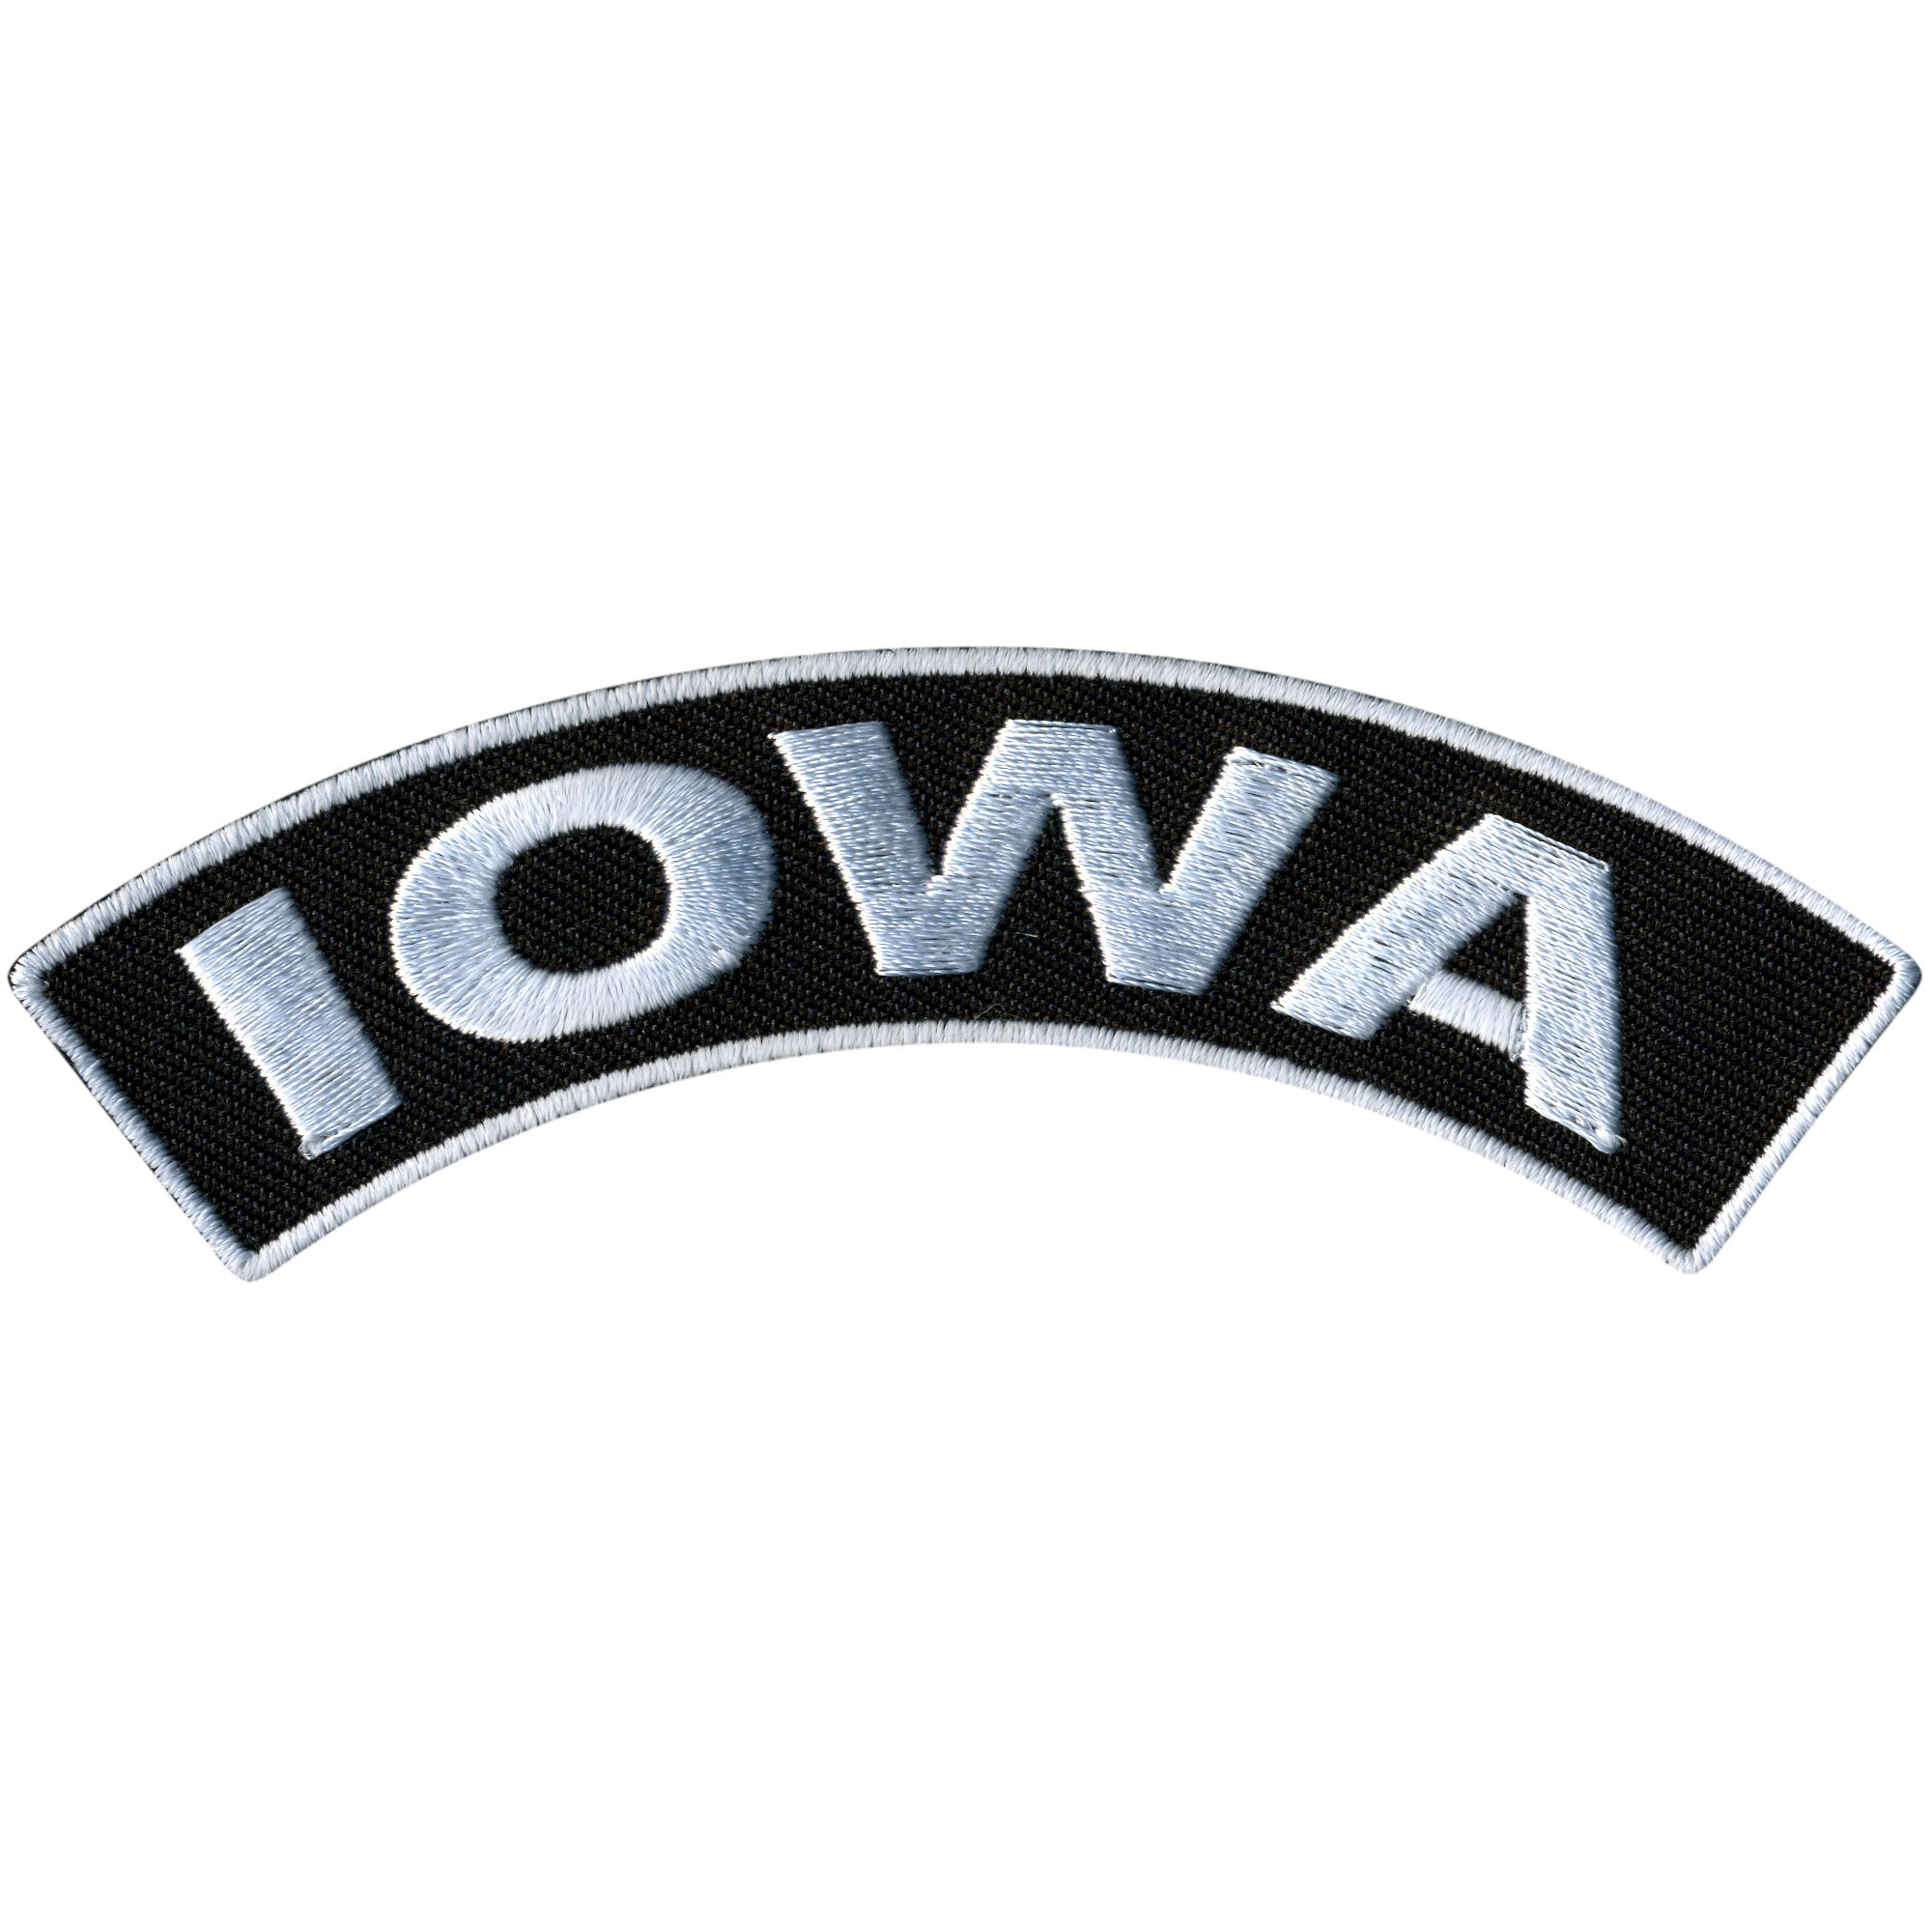 Hot Leathers Iowa 4” X 1” Top Rocker Patch